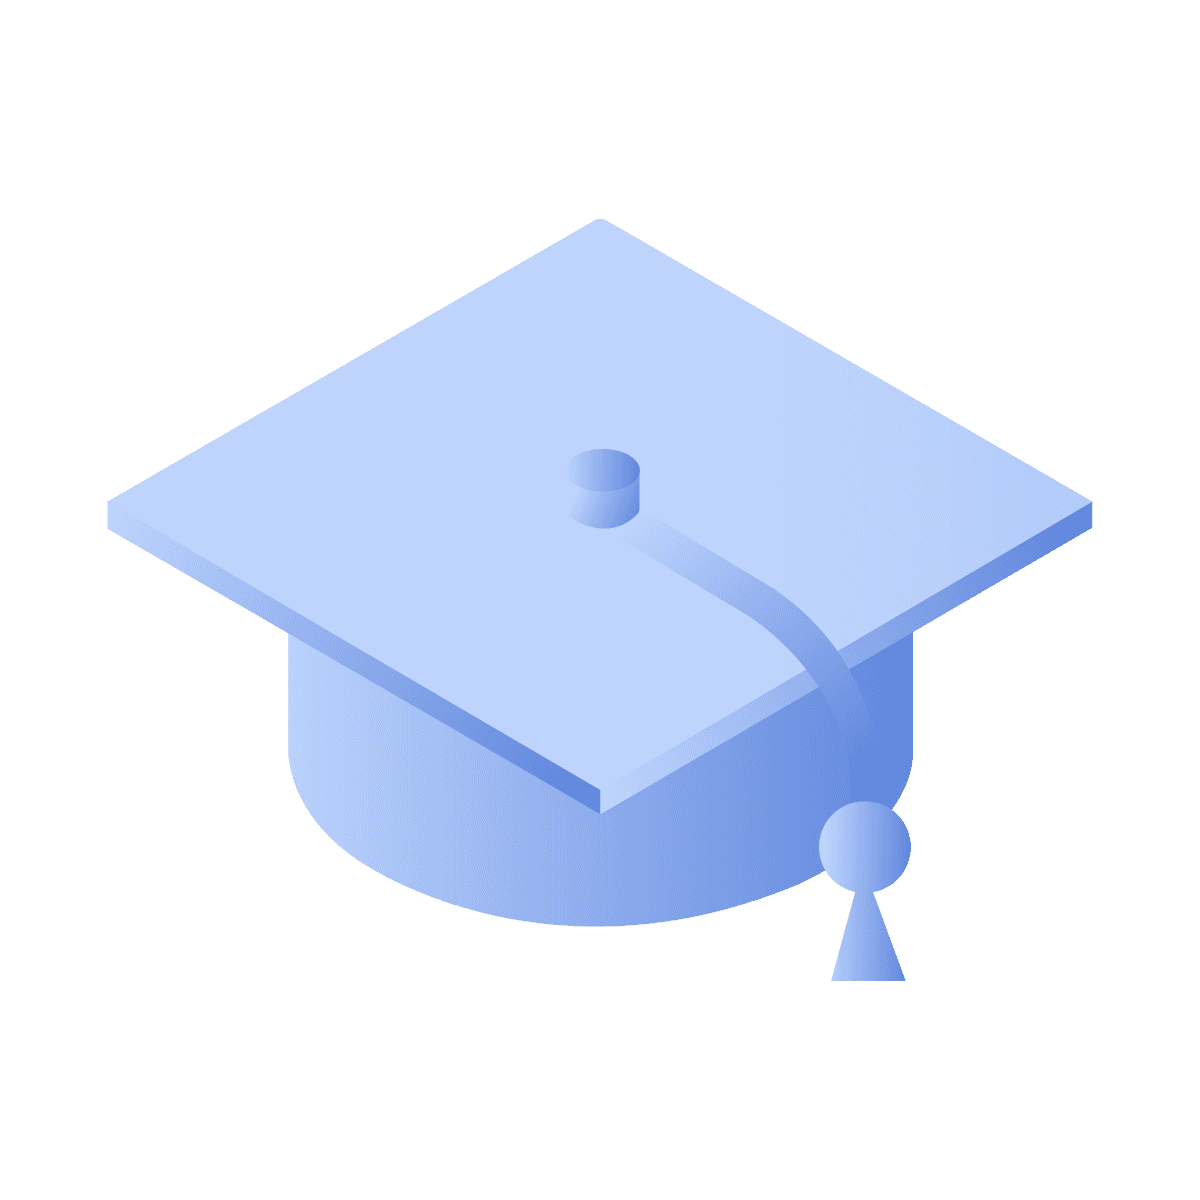 graduation cap illustration element in block style